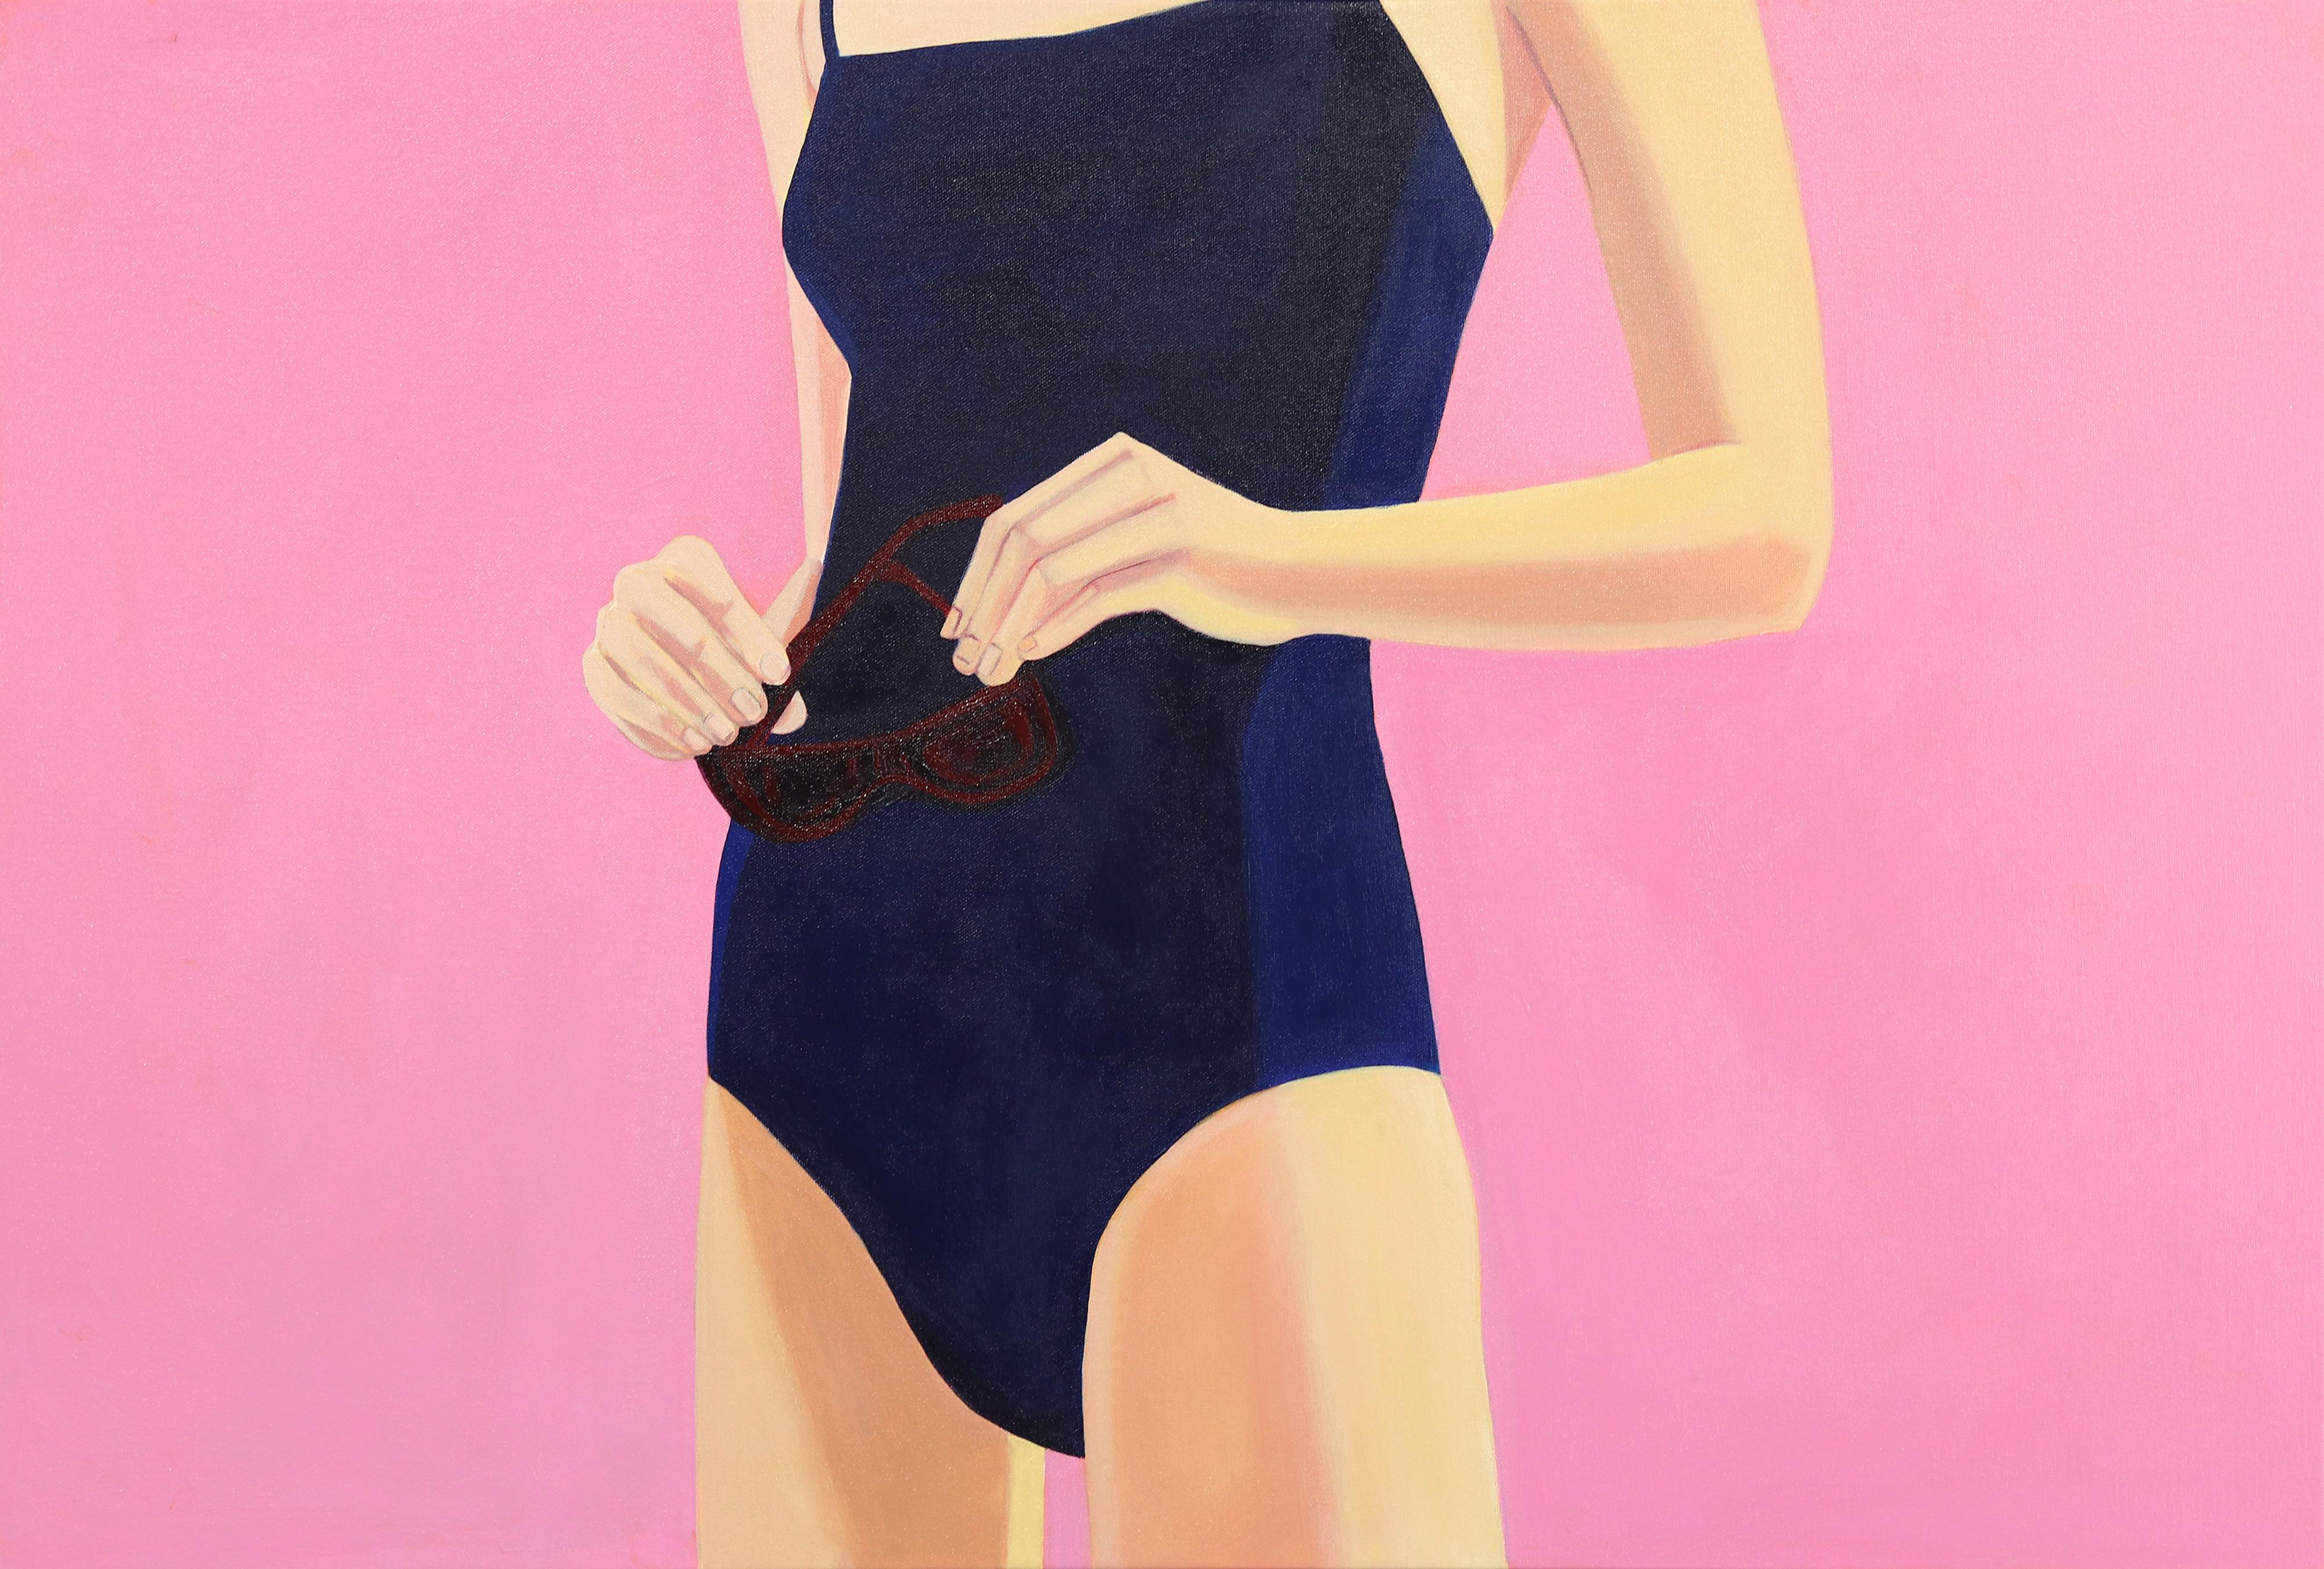 Woman with Sunglasses and Swimsuit - Art by Darwin Estacio Martinez